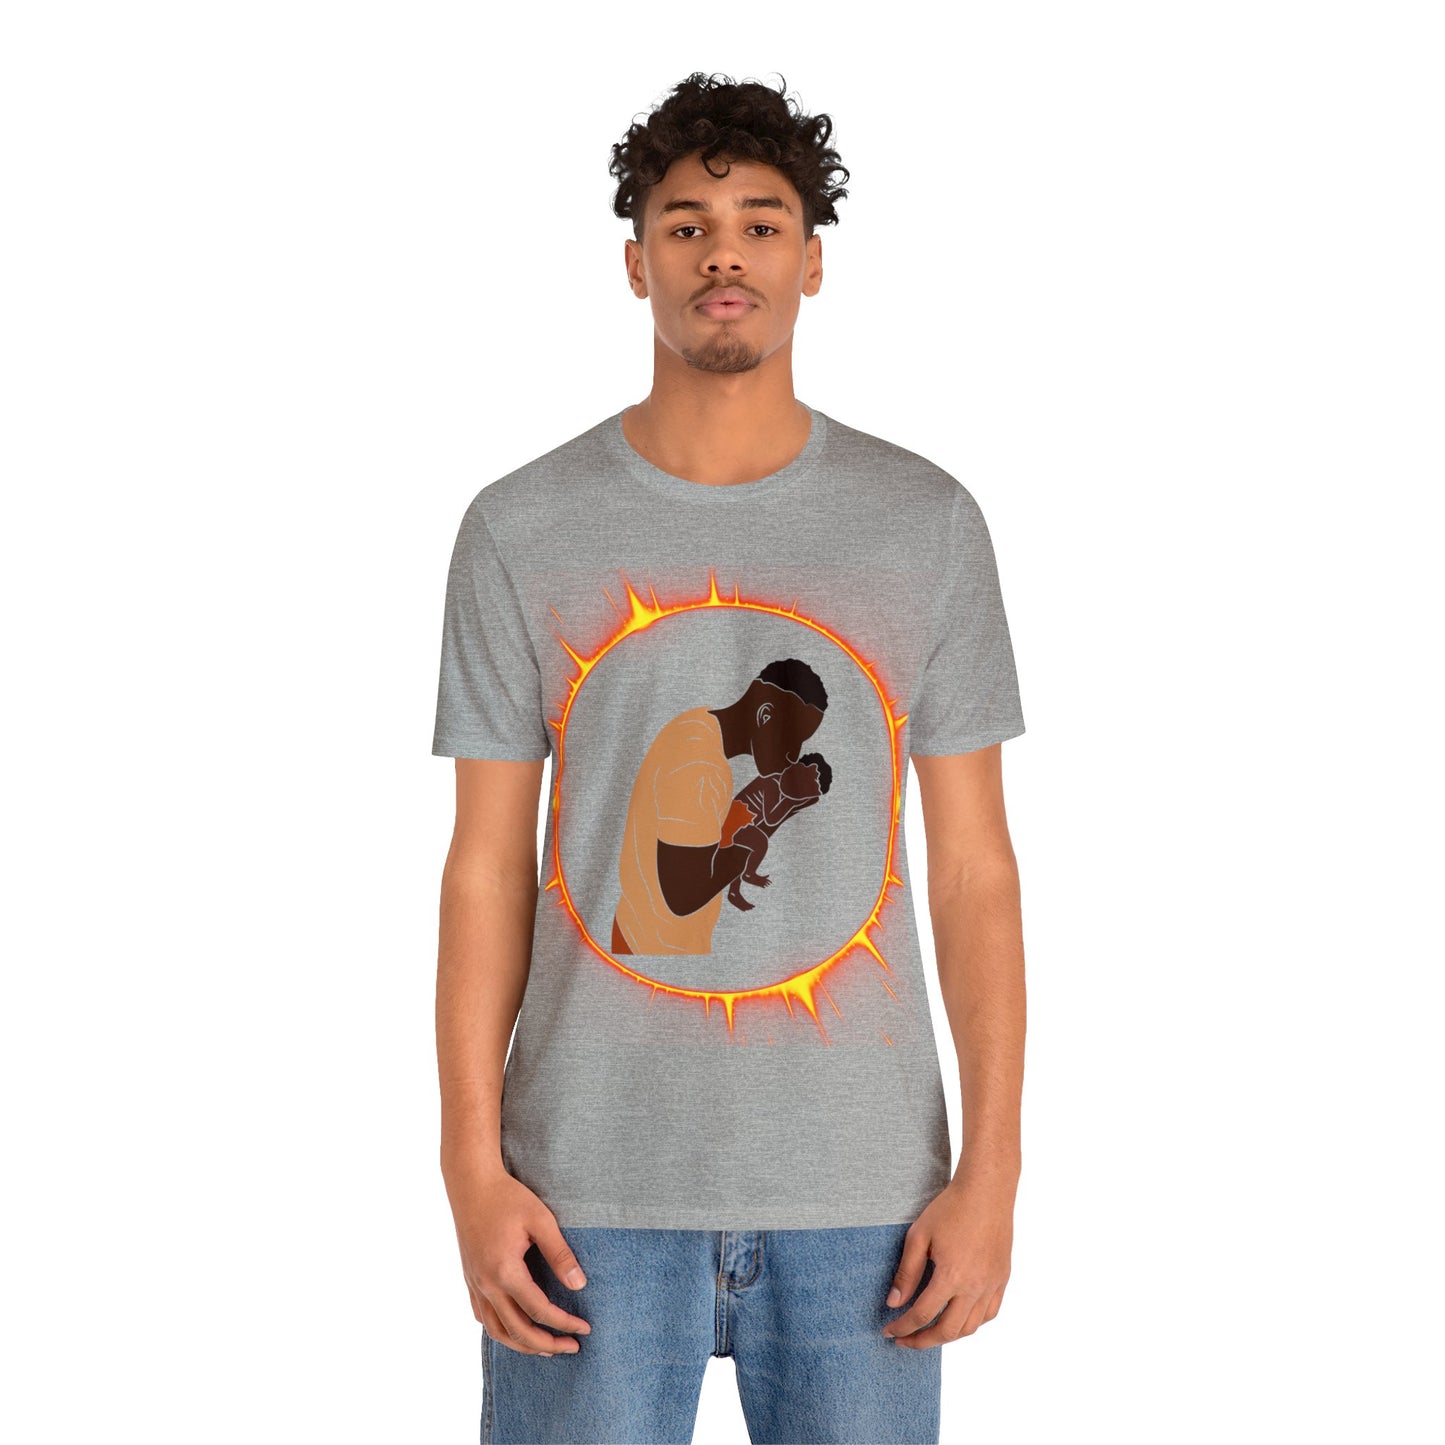 Black Dads Matter | Father's Day Gift | Black Family | Juneteenth | Unisex | Men's | Women's | Tee | T-Shirt